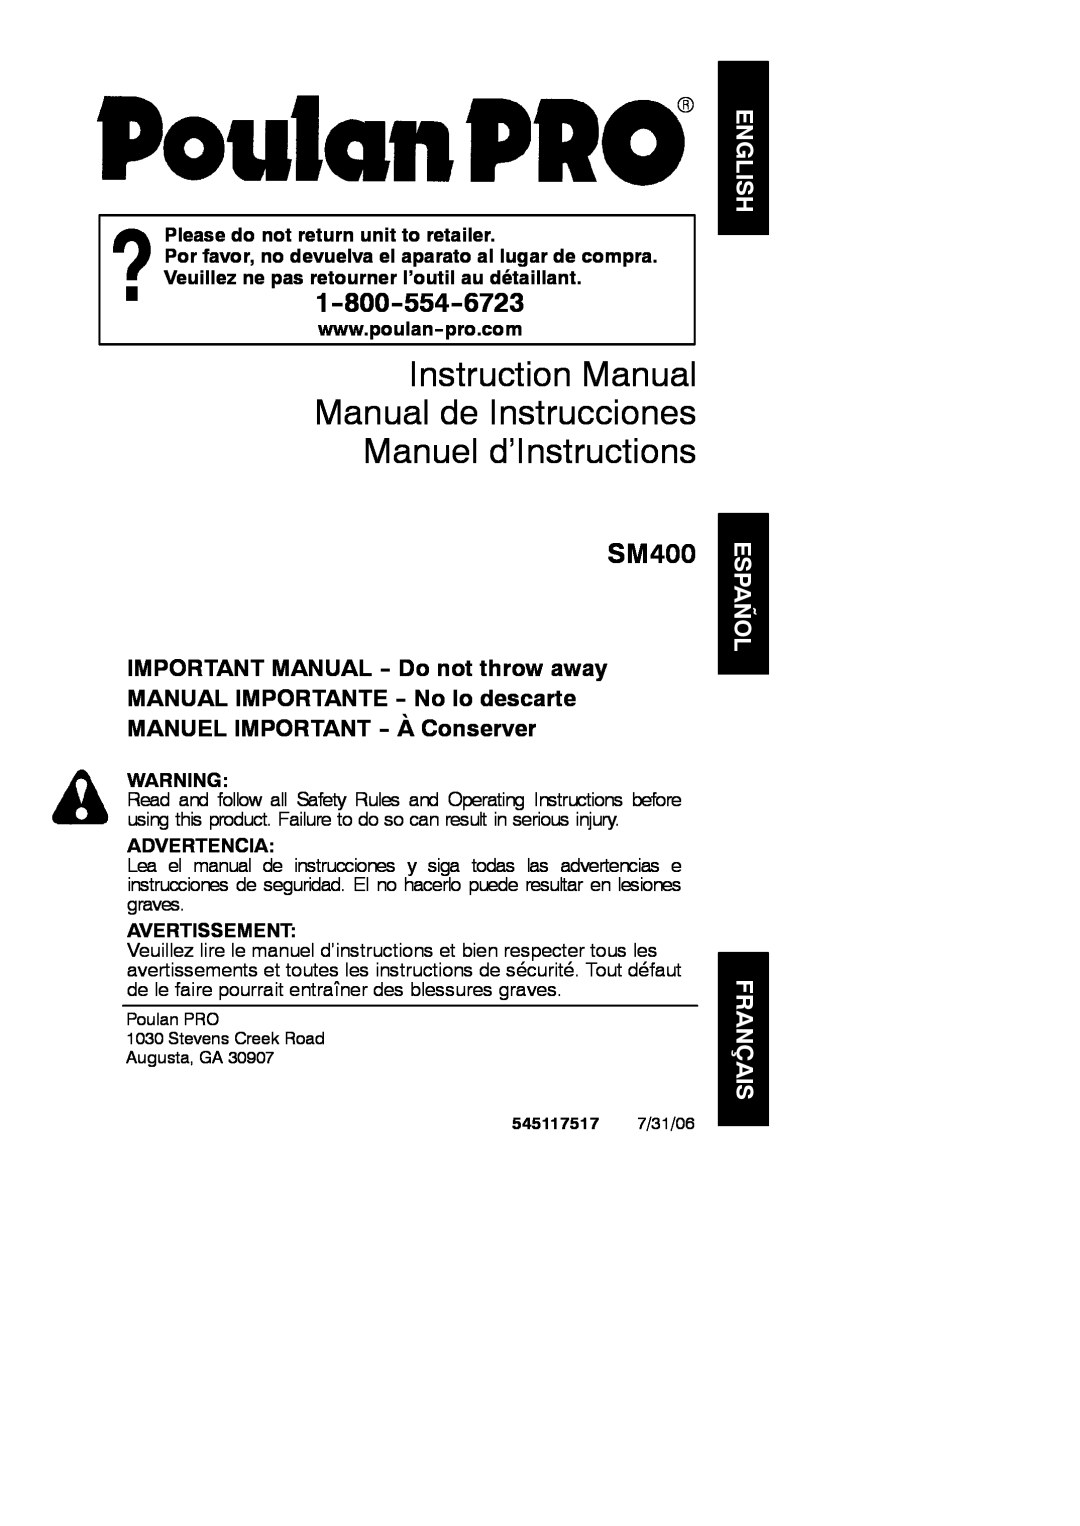 Poulan SM400 instruction manual English Español Français, Please do not return unit to retailer, Advertencia 